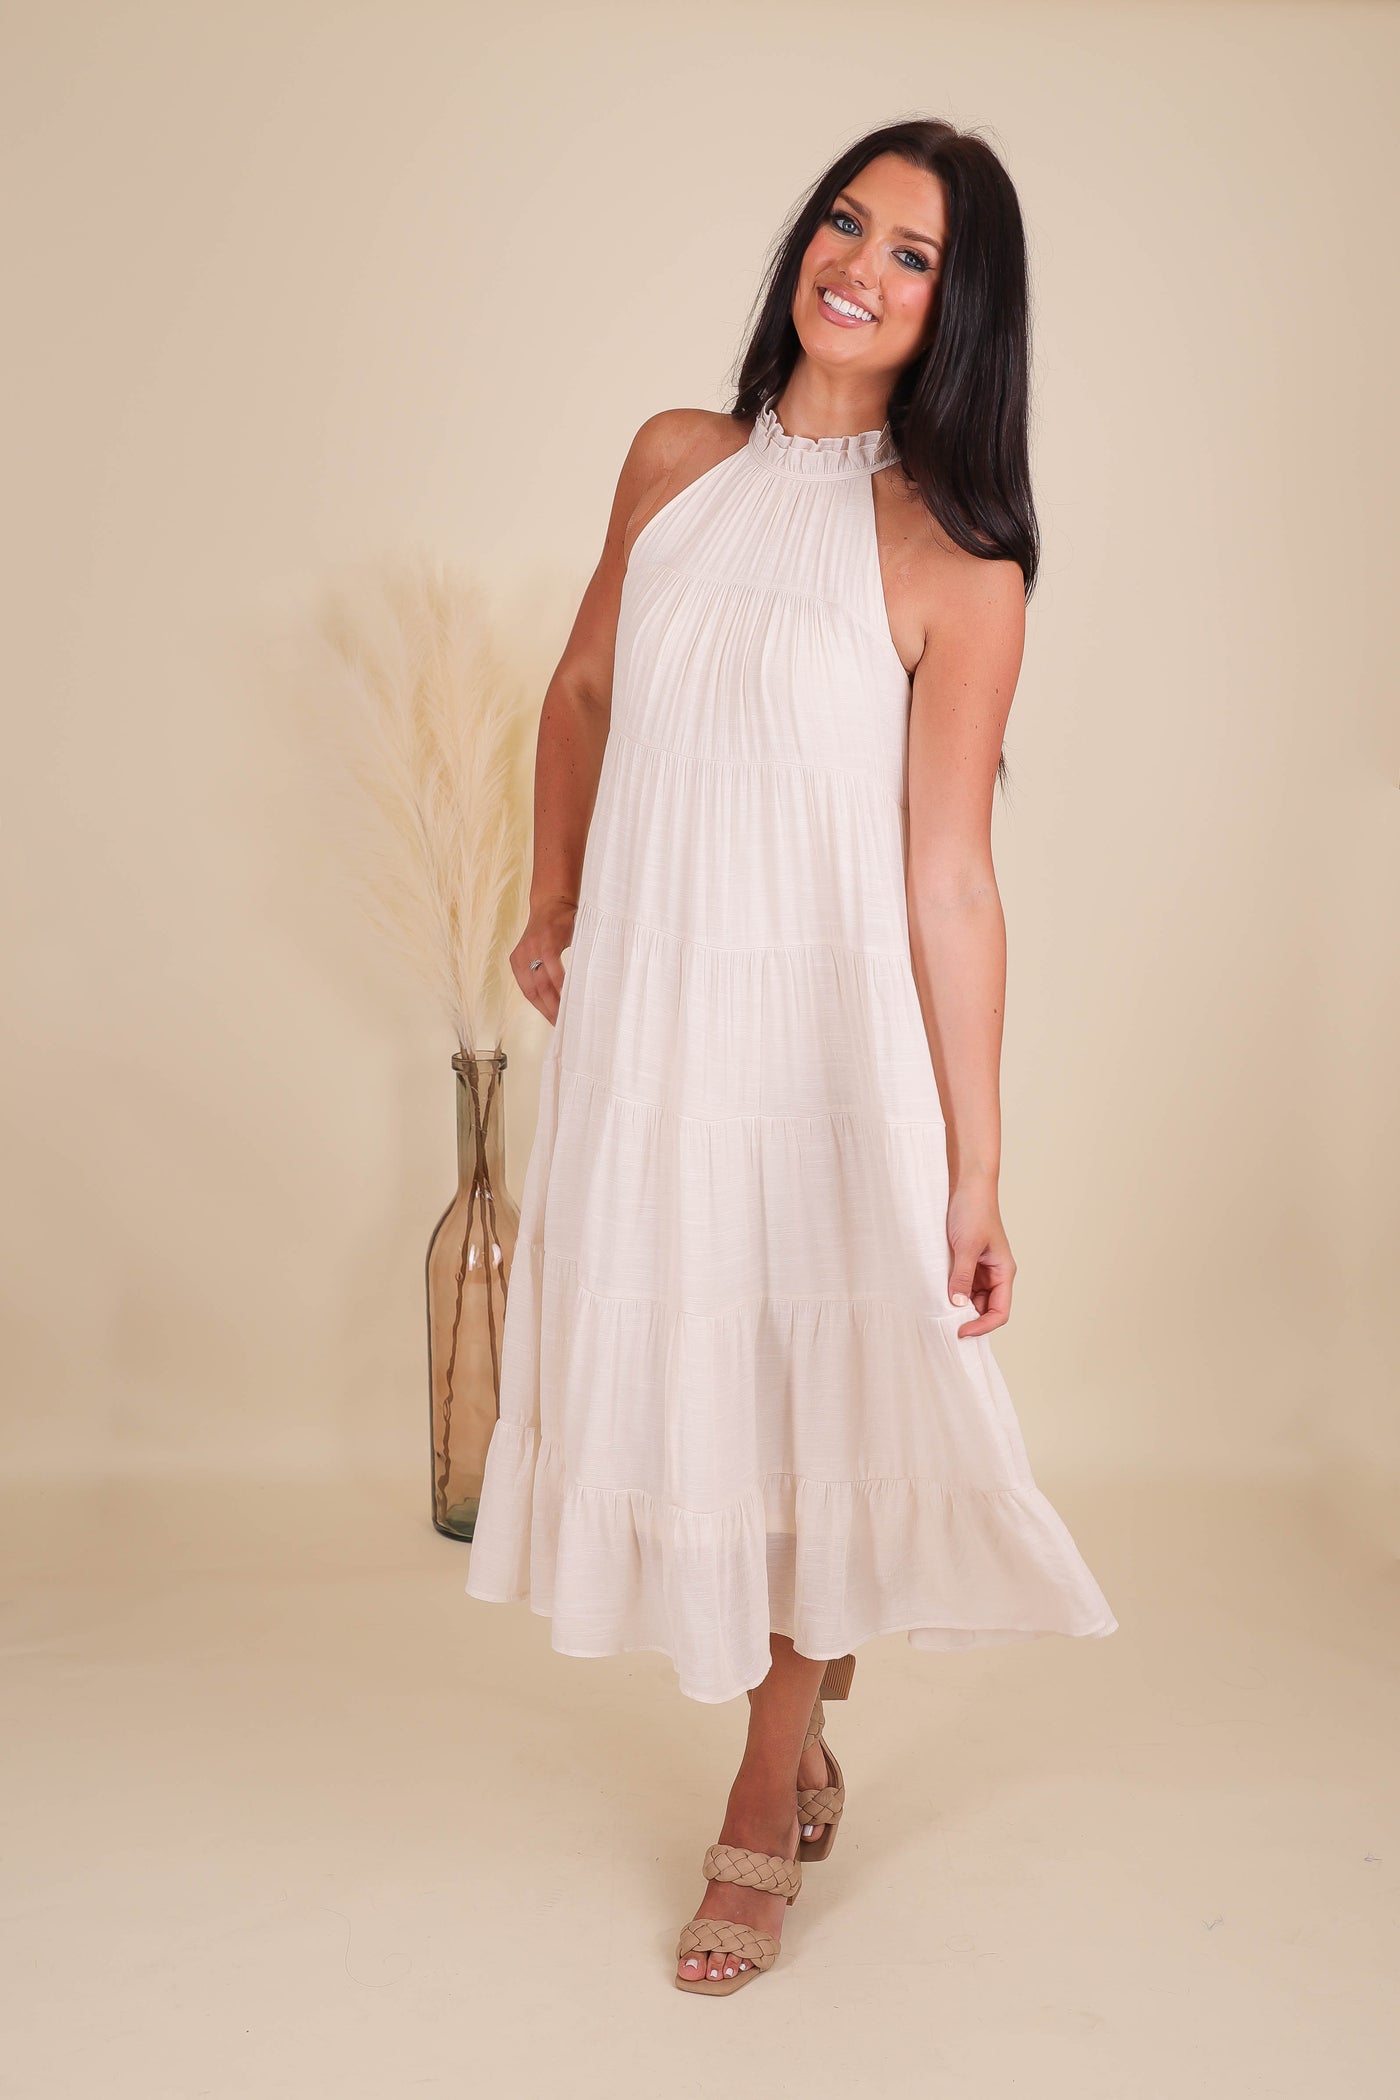 Chic High Neck Midi Dress- Women's Ivory Midi Dress- Umgee Maxi Dress